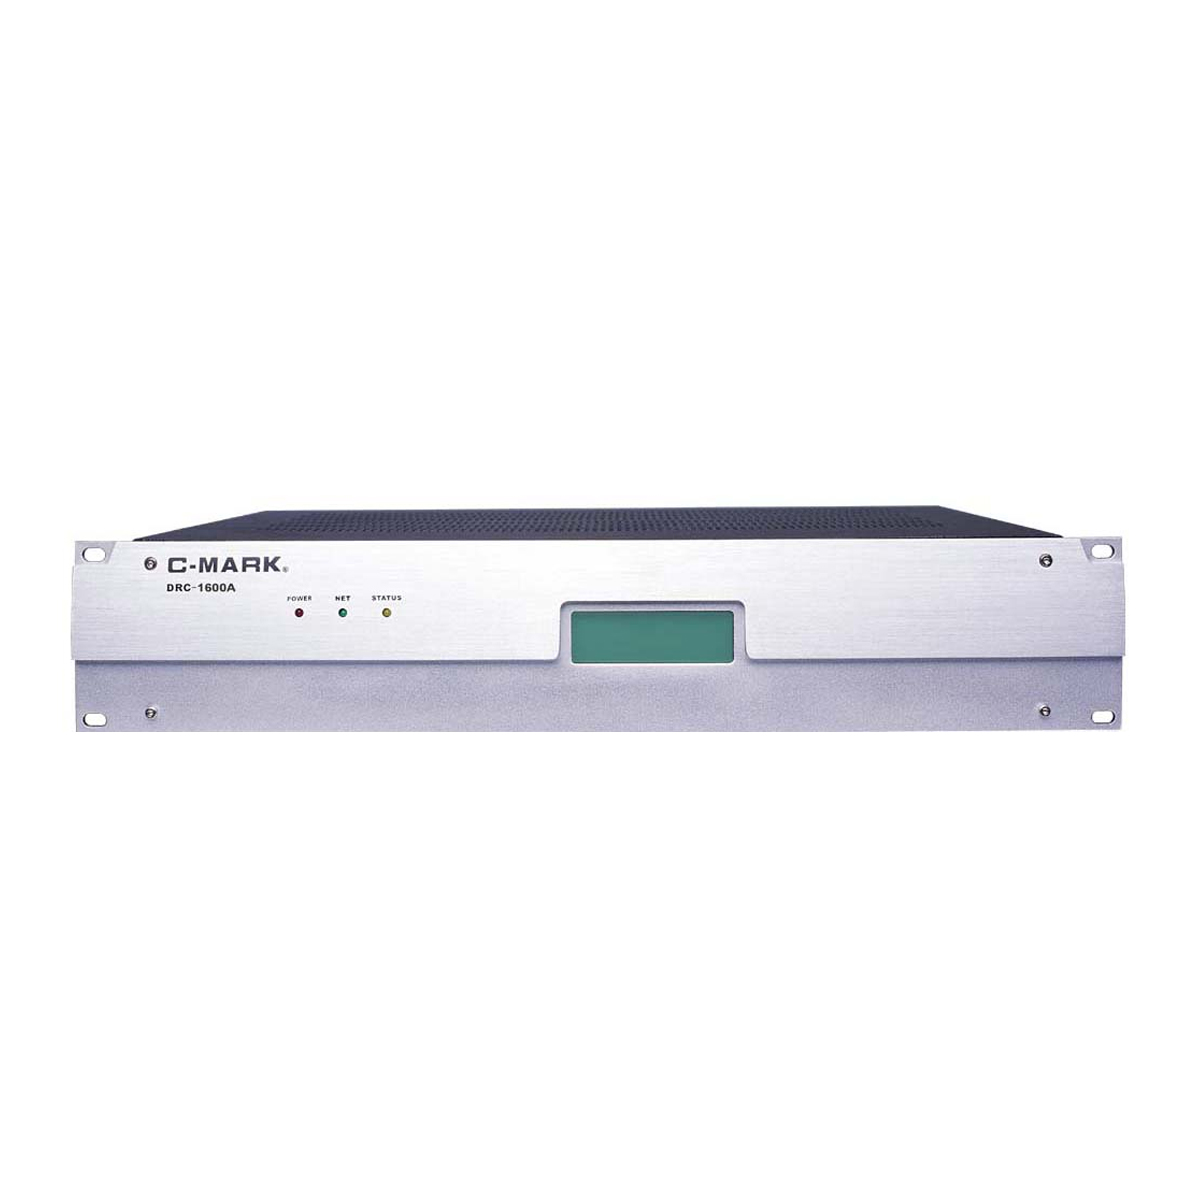 DRC 1600A Network Audio Transmitter